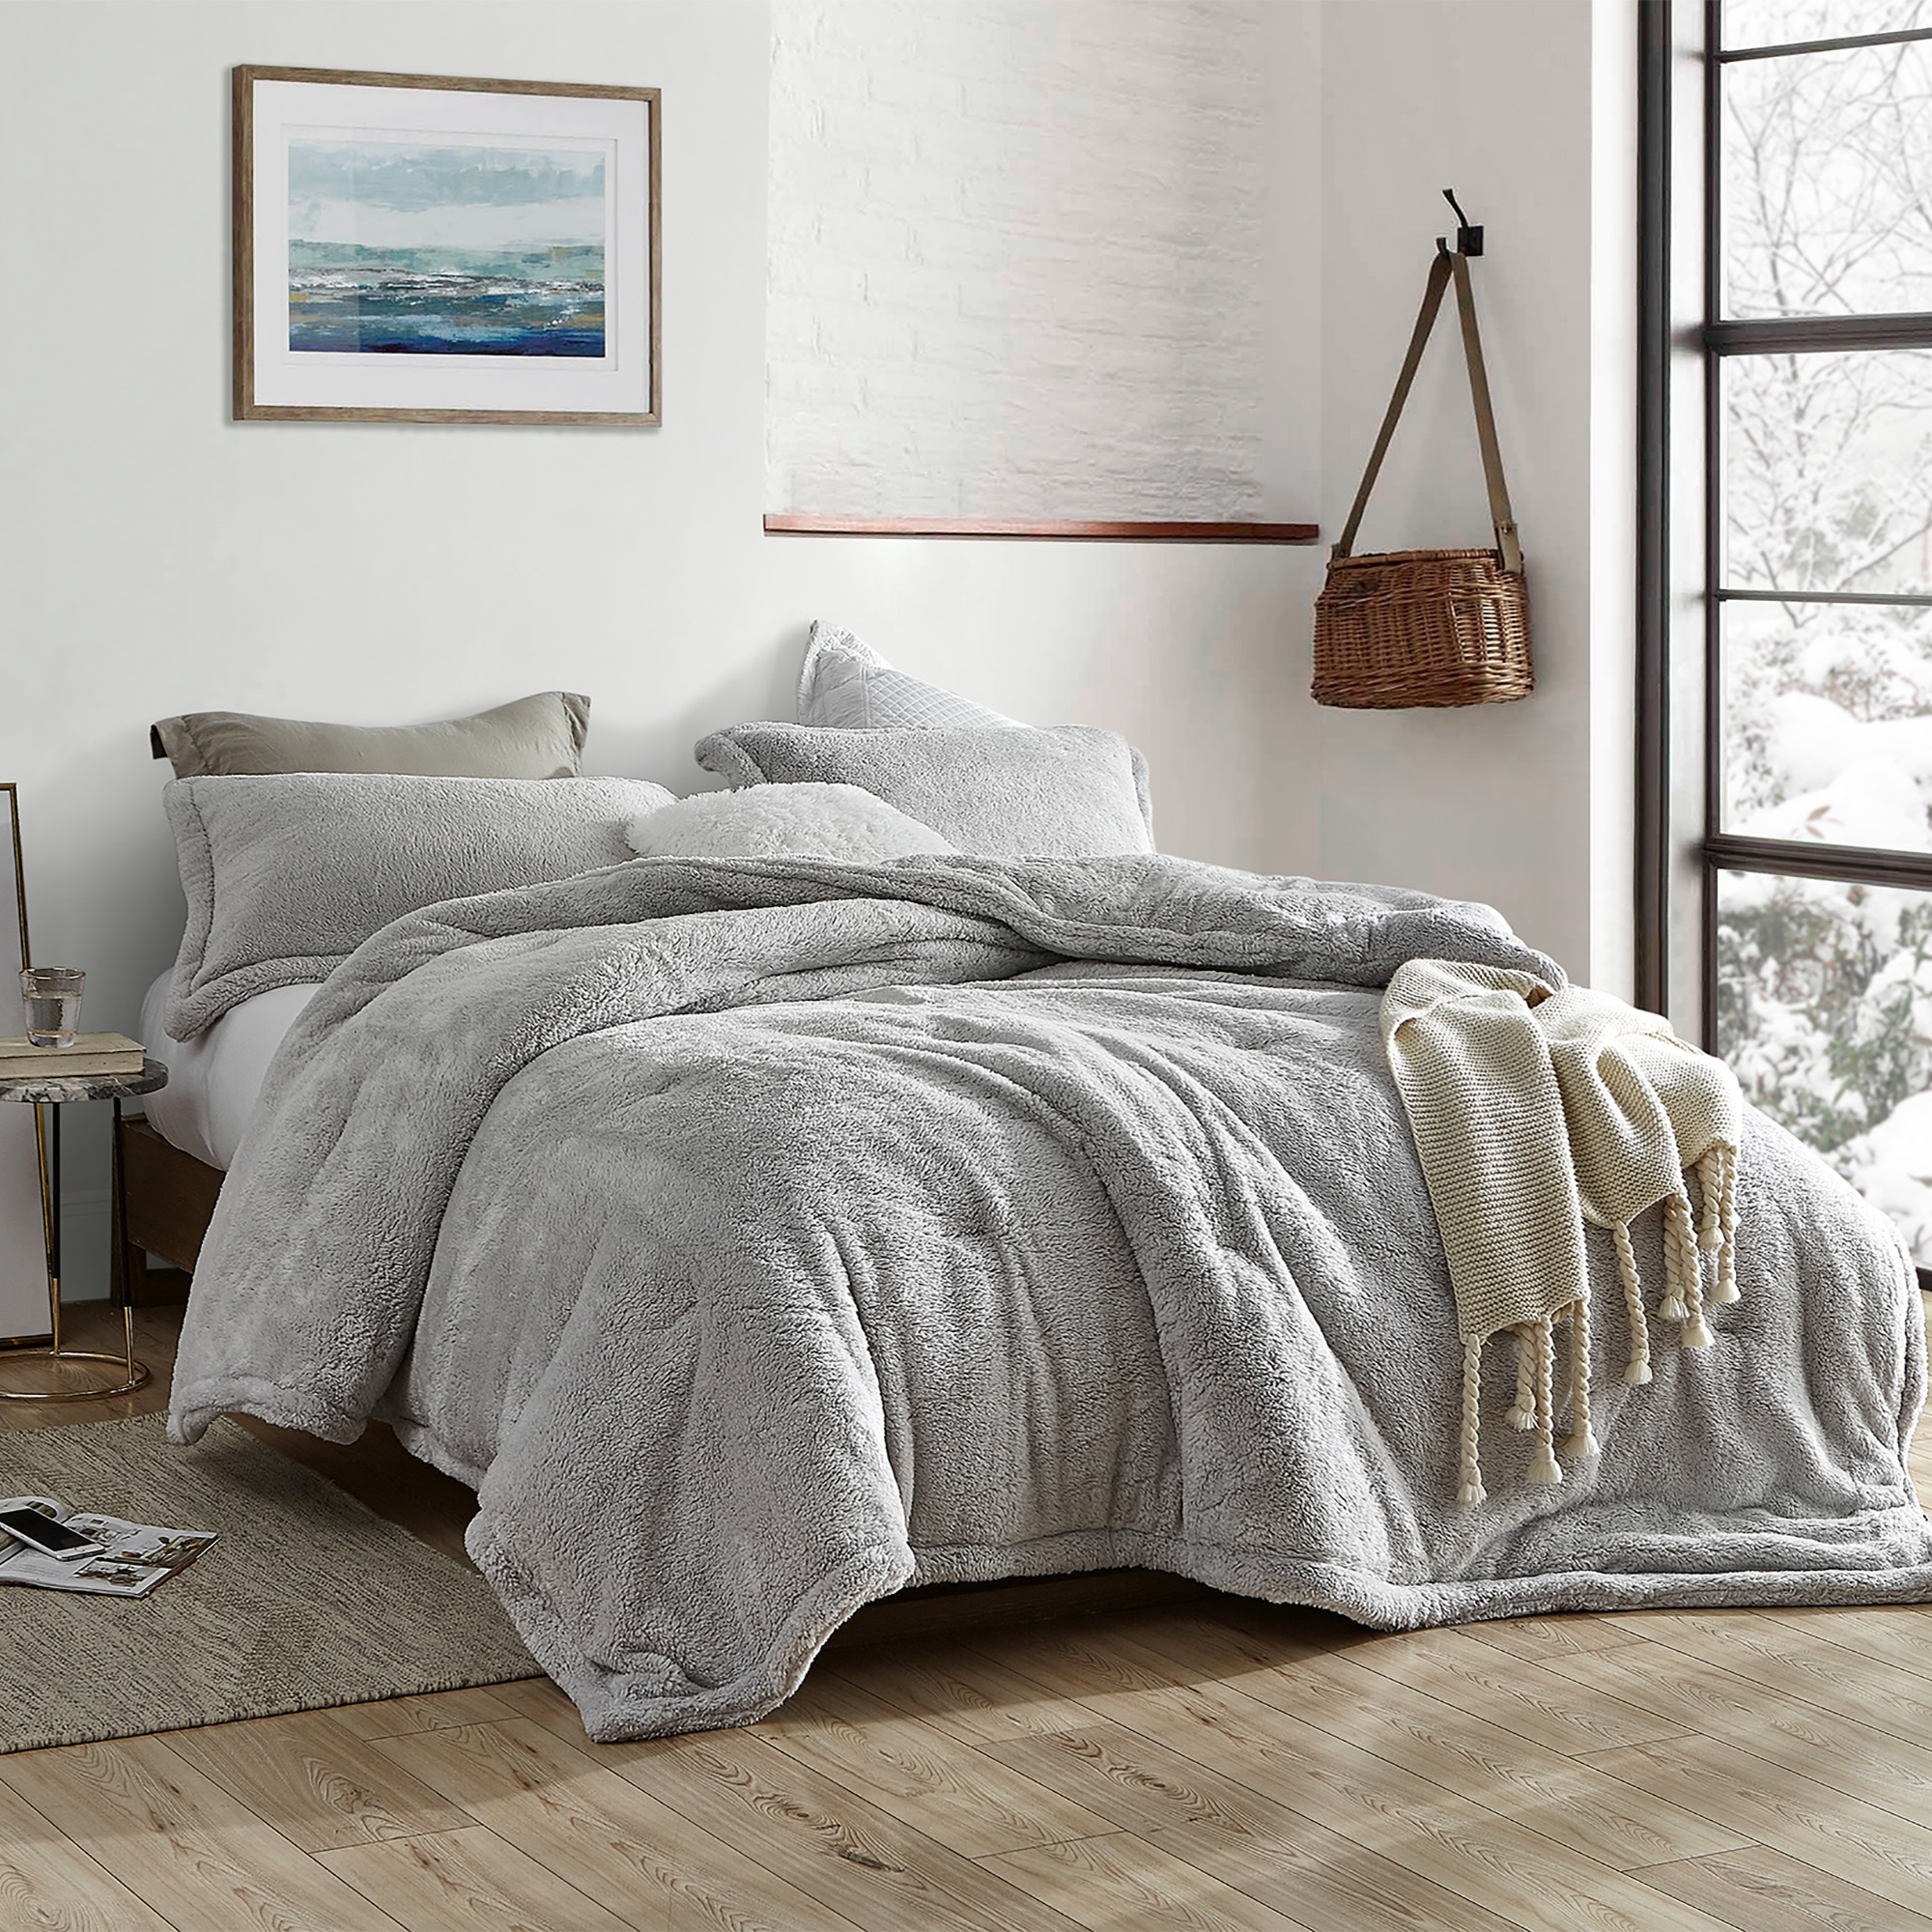 Coma Inducer® Oversized Comforter - The Original Plush - Silver Stone